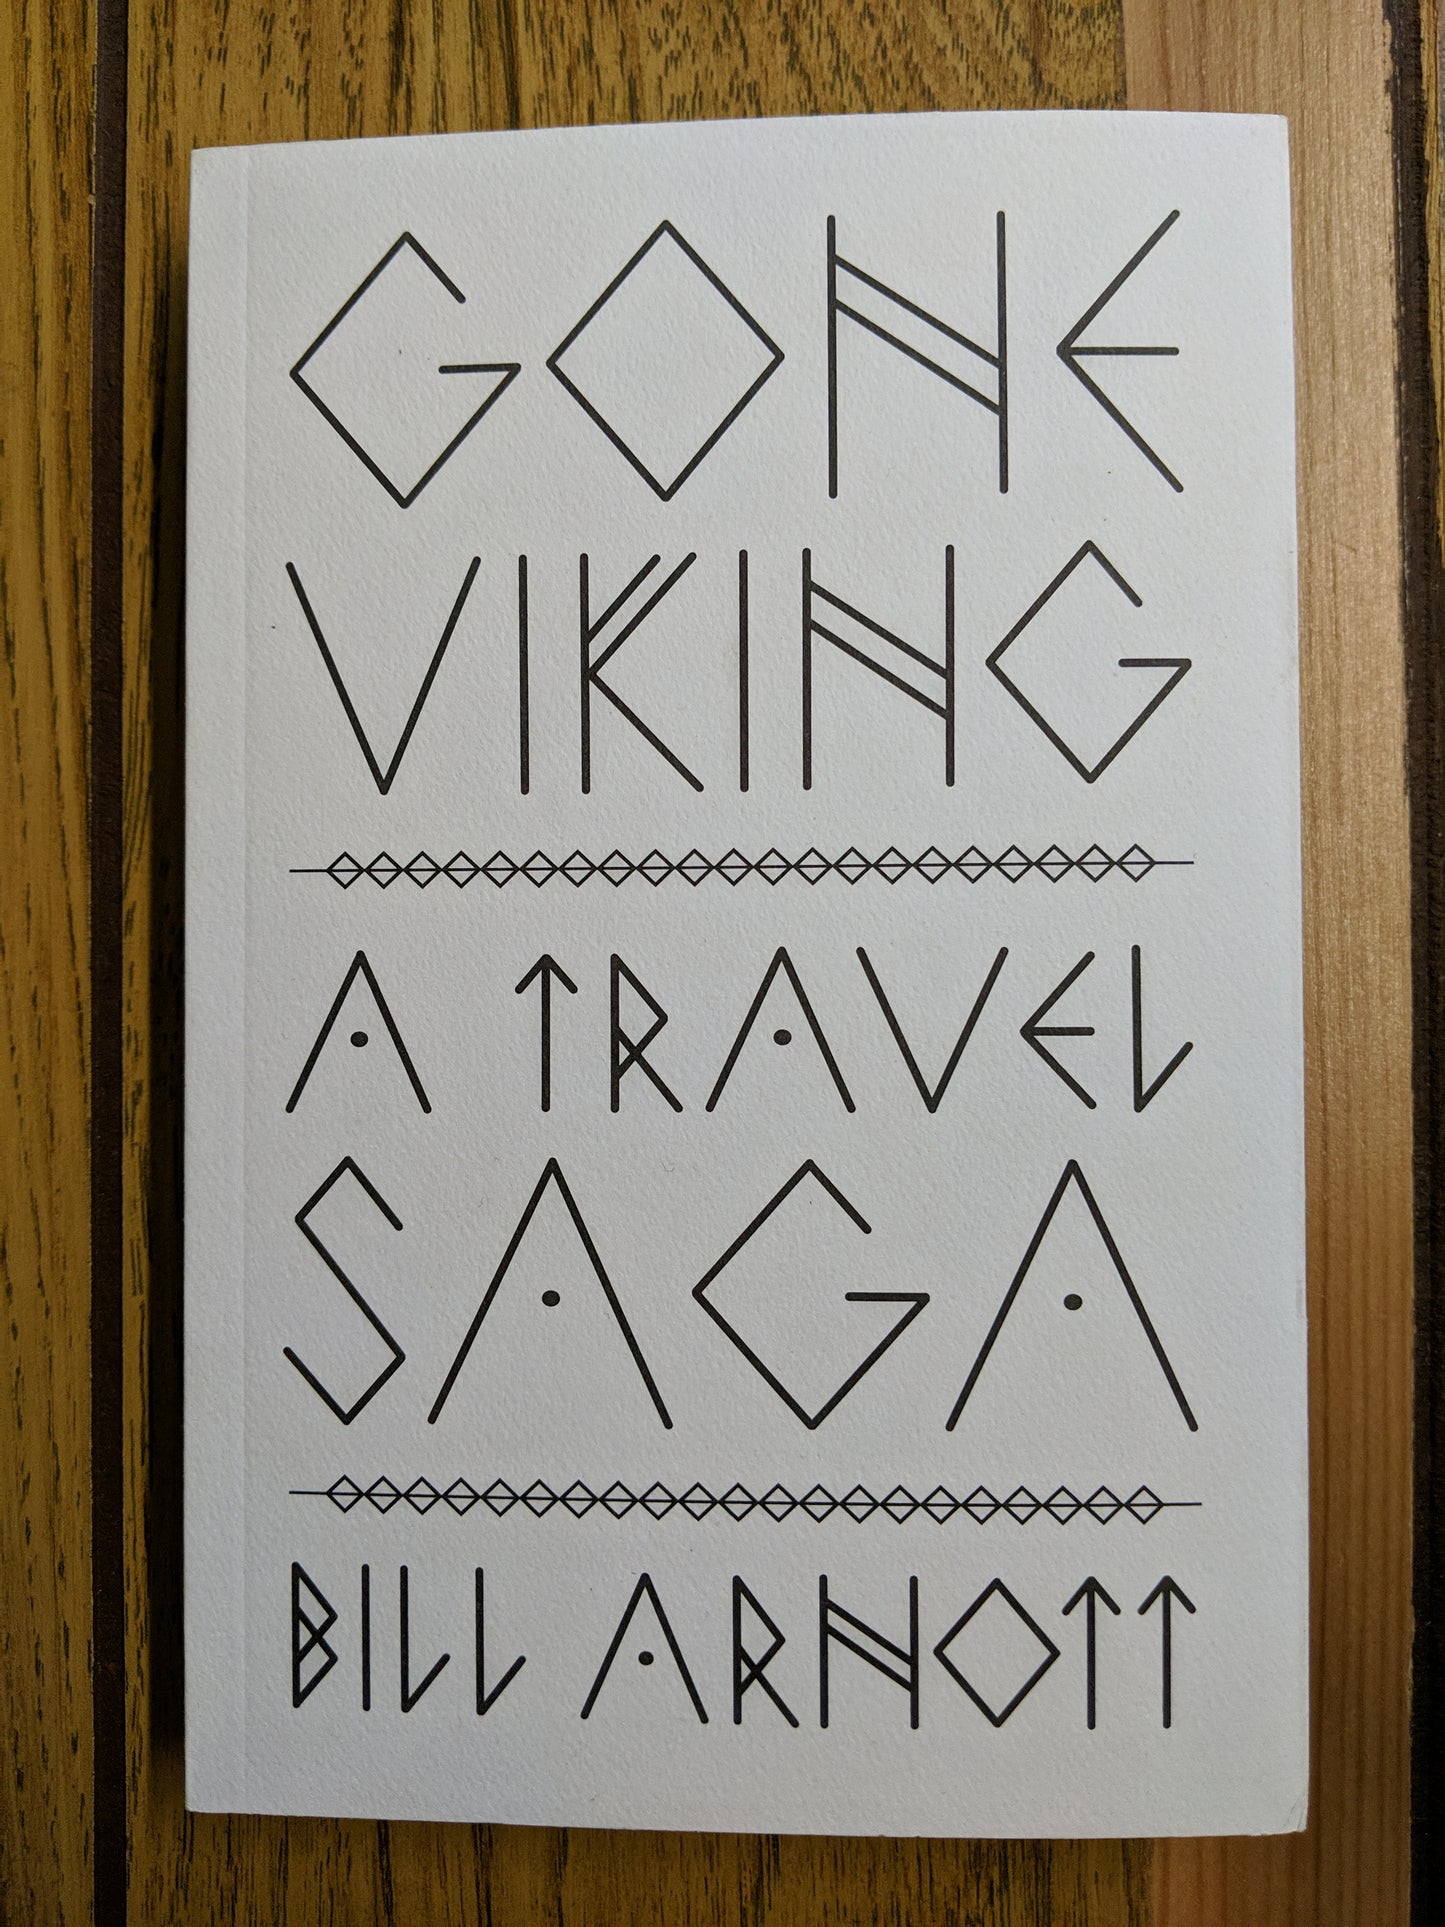 Gone Viking: A Travel Saga